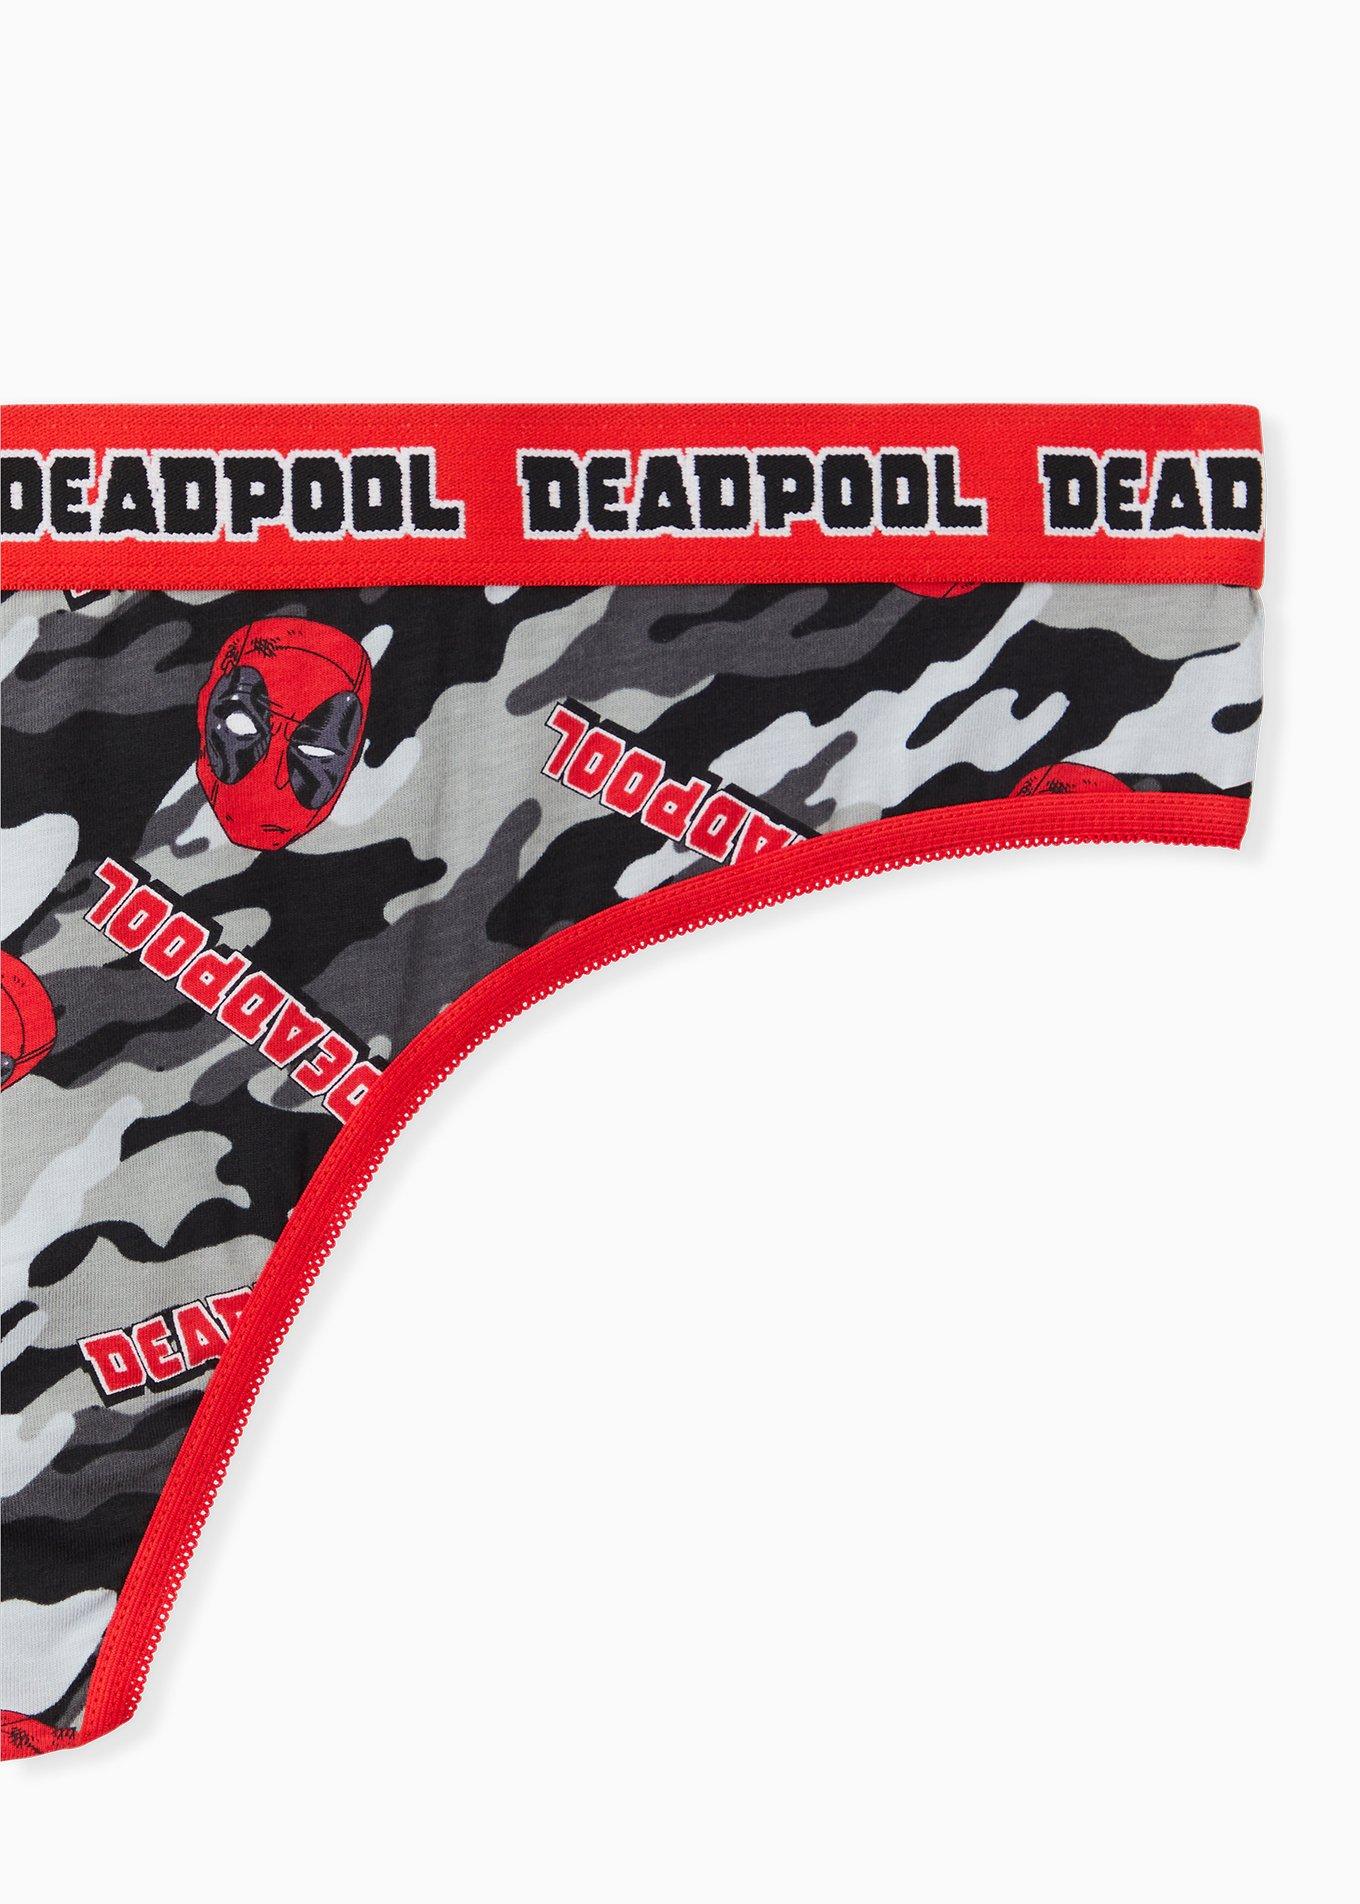 torrid, Intimates & Sleepwear, Torrid Marvel Deadpool Logo Red Cotton  Hipster Panty Underwear Sz 2